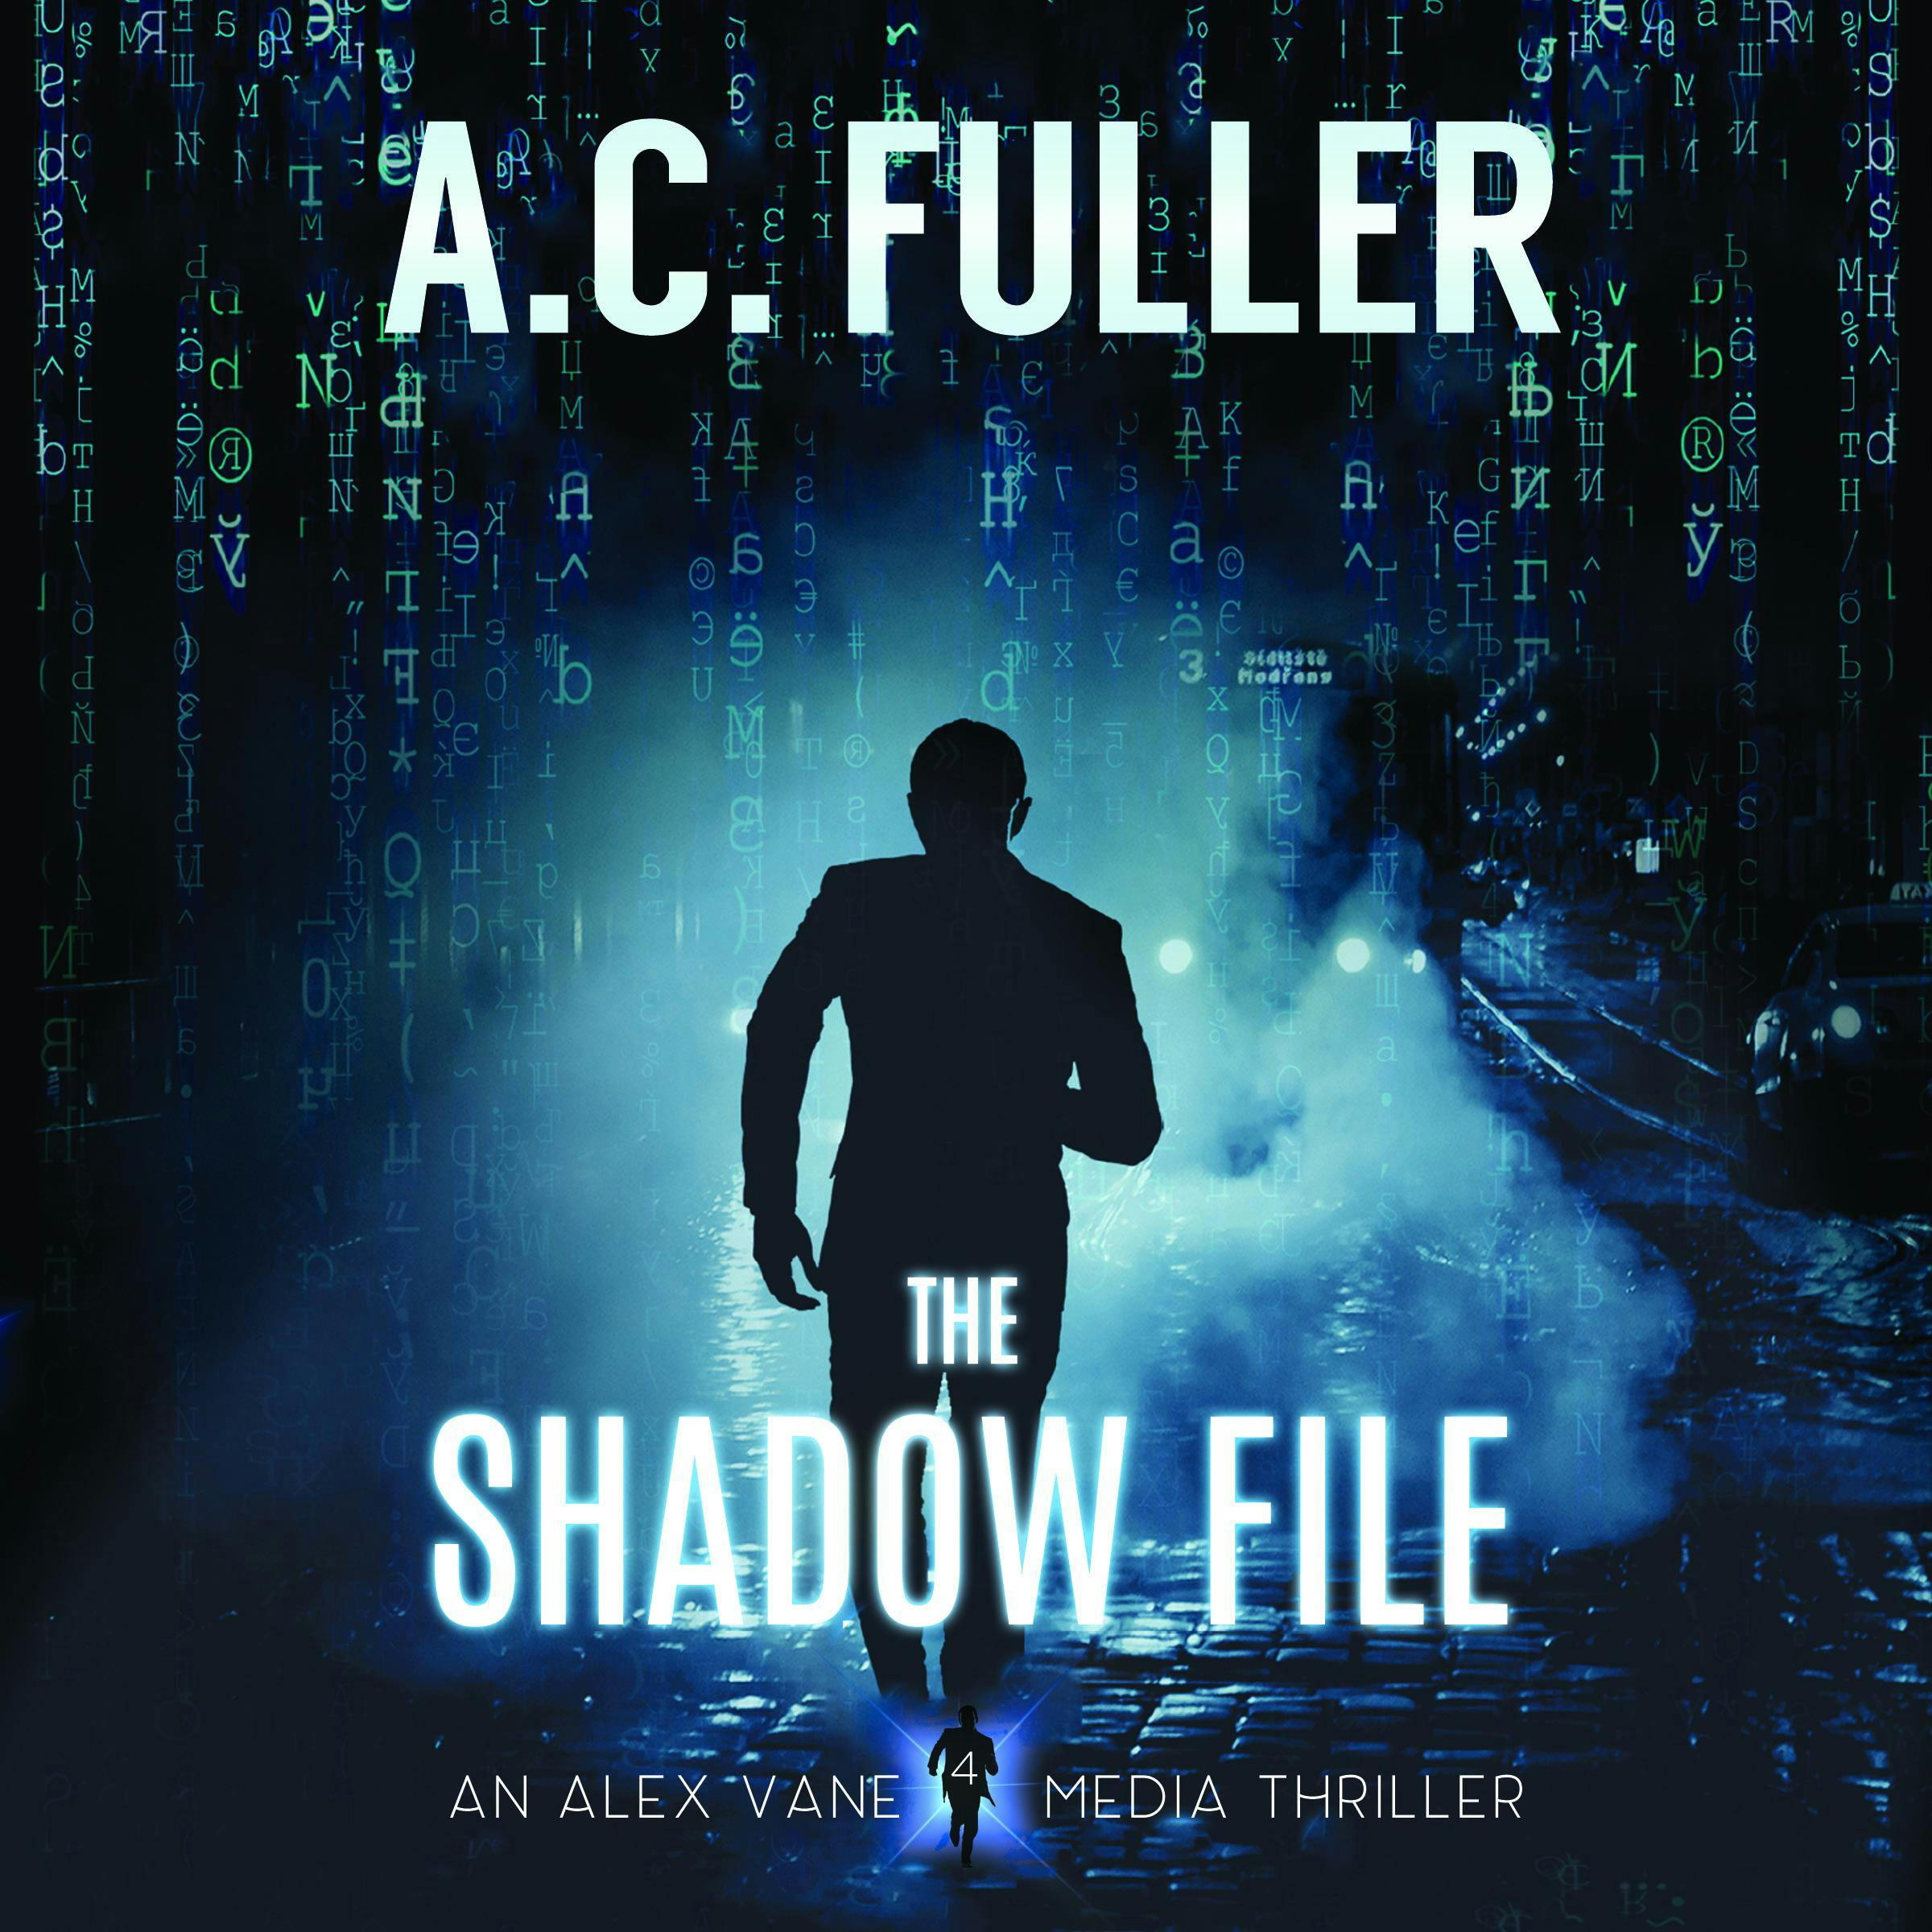 The Shadow File: An Alex Vane Media Thriller - undefined